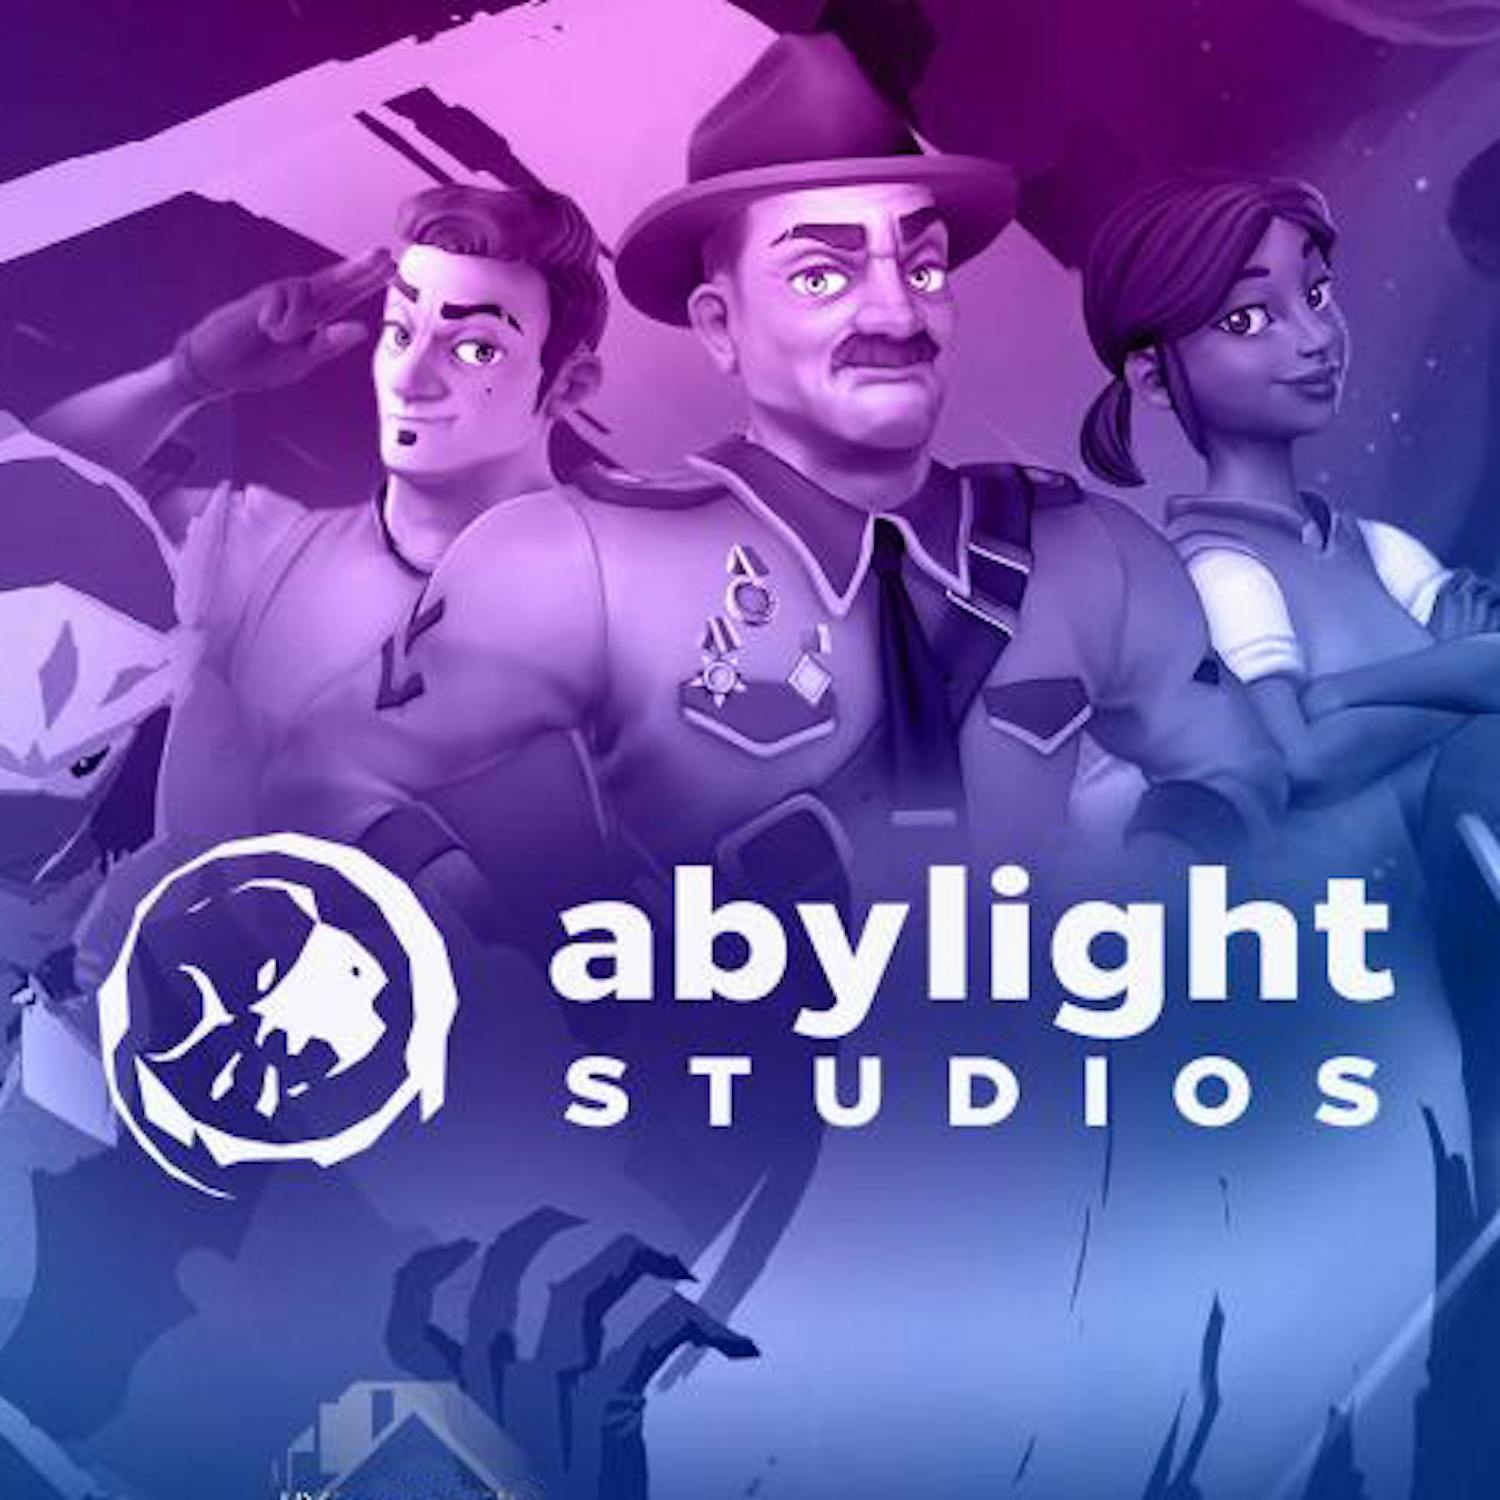 abylight studios